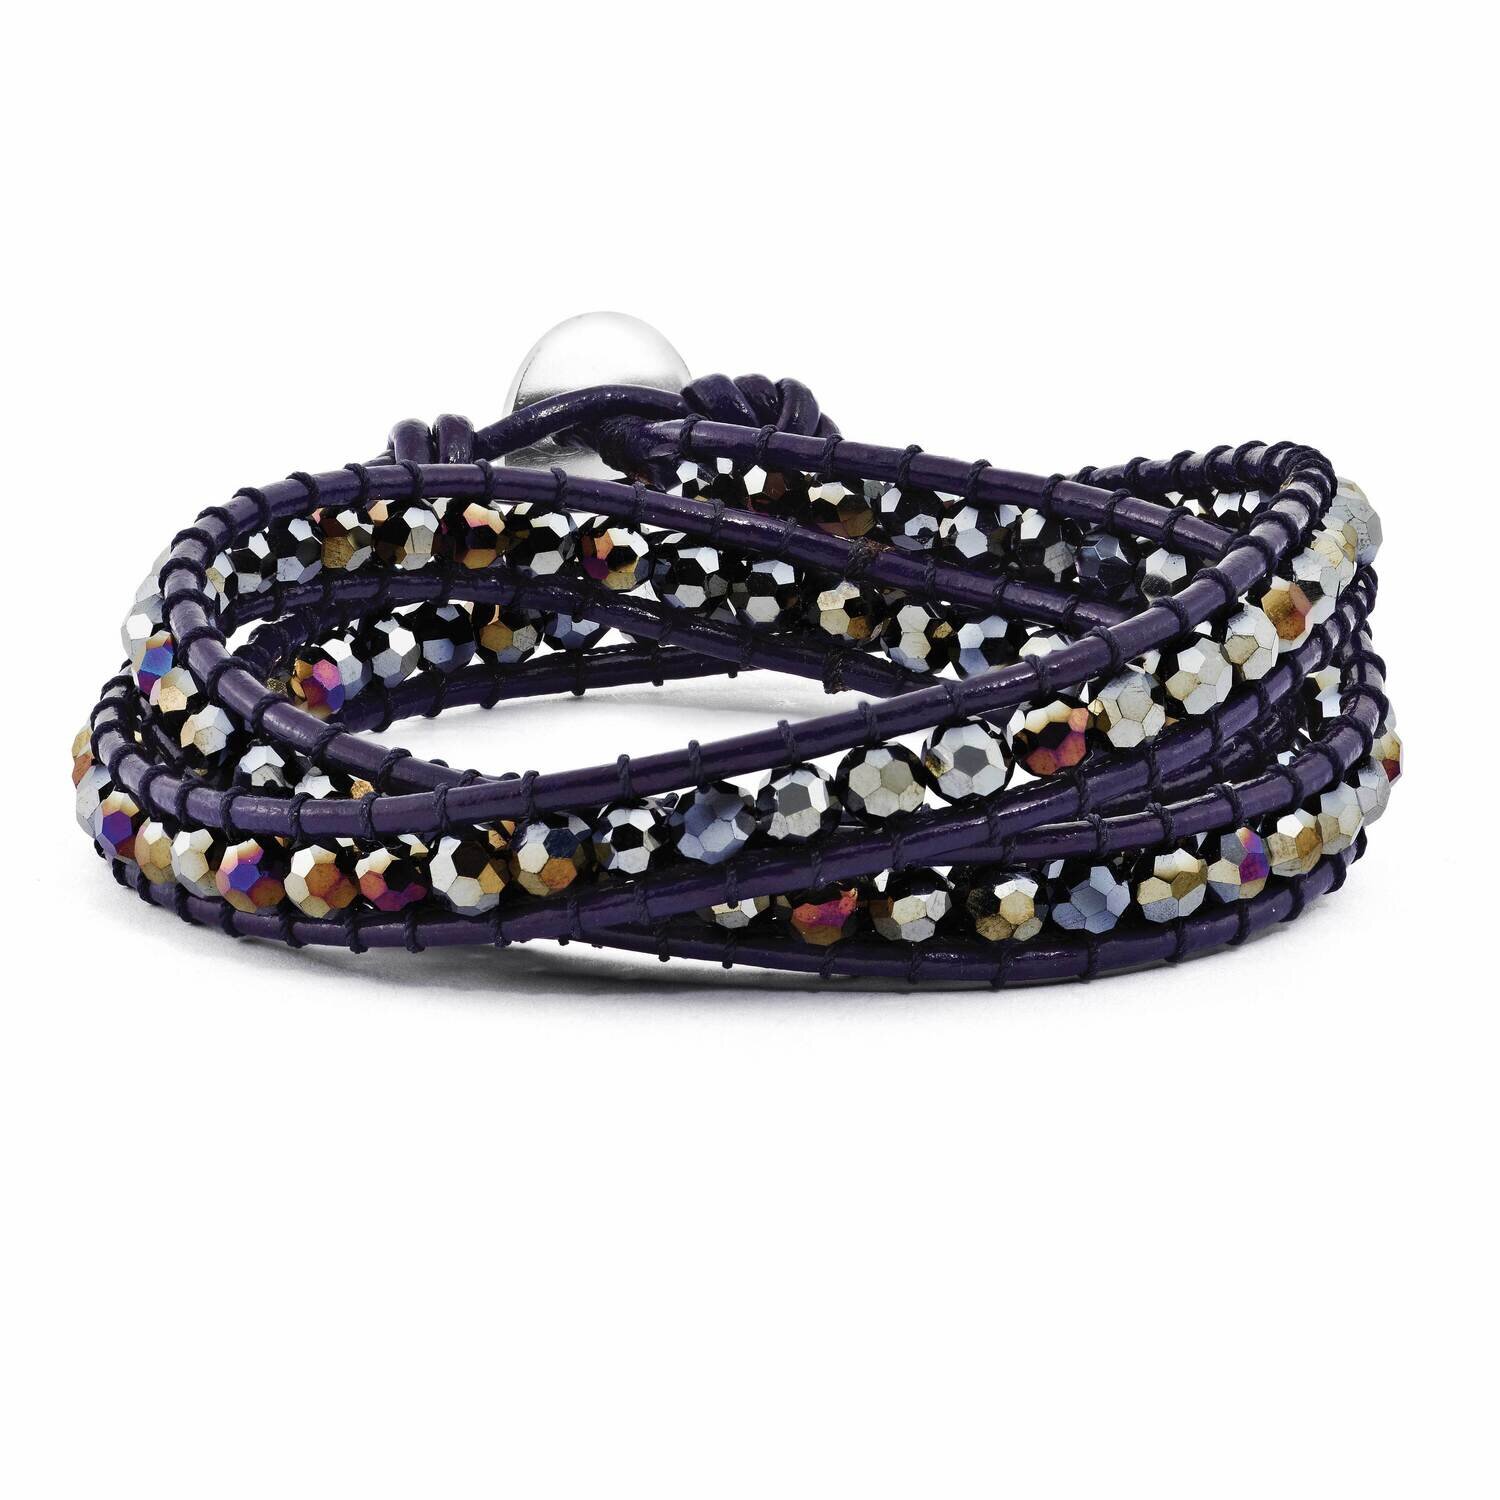 Dark Grey Aurora Borealis Crystal Bead and Leather Bracelet Multi Wrap BF2097